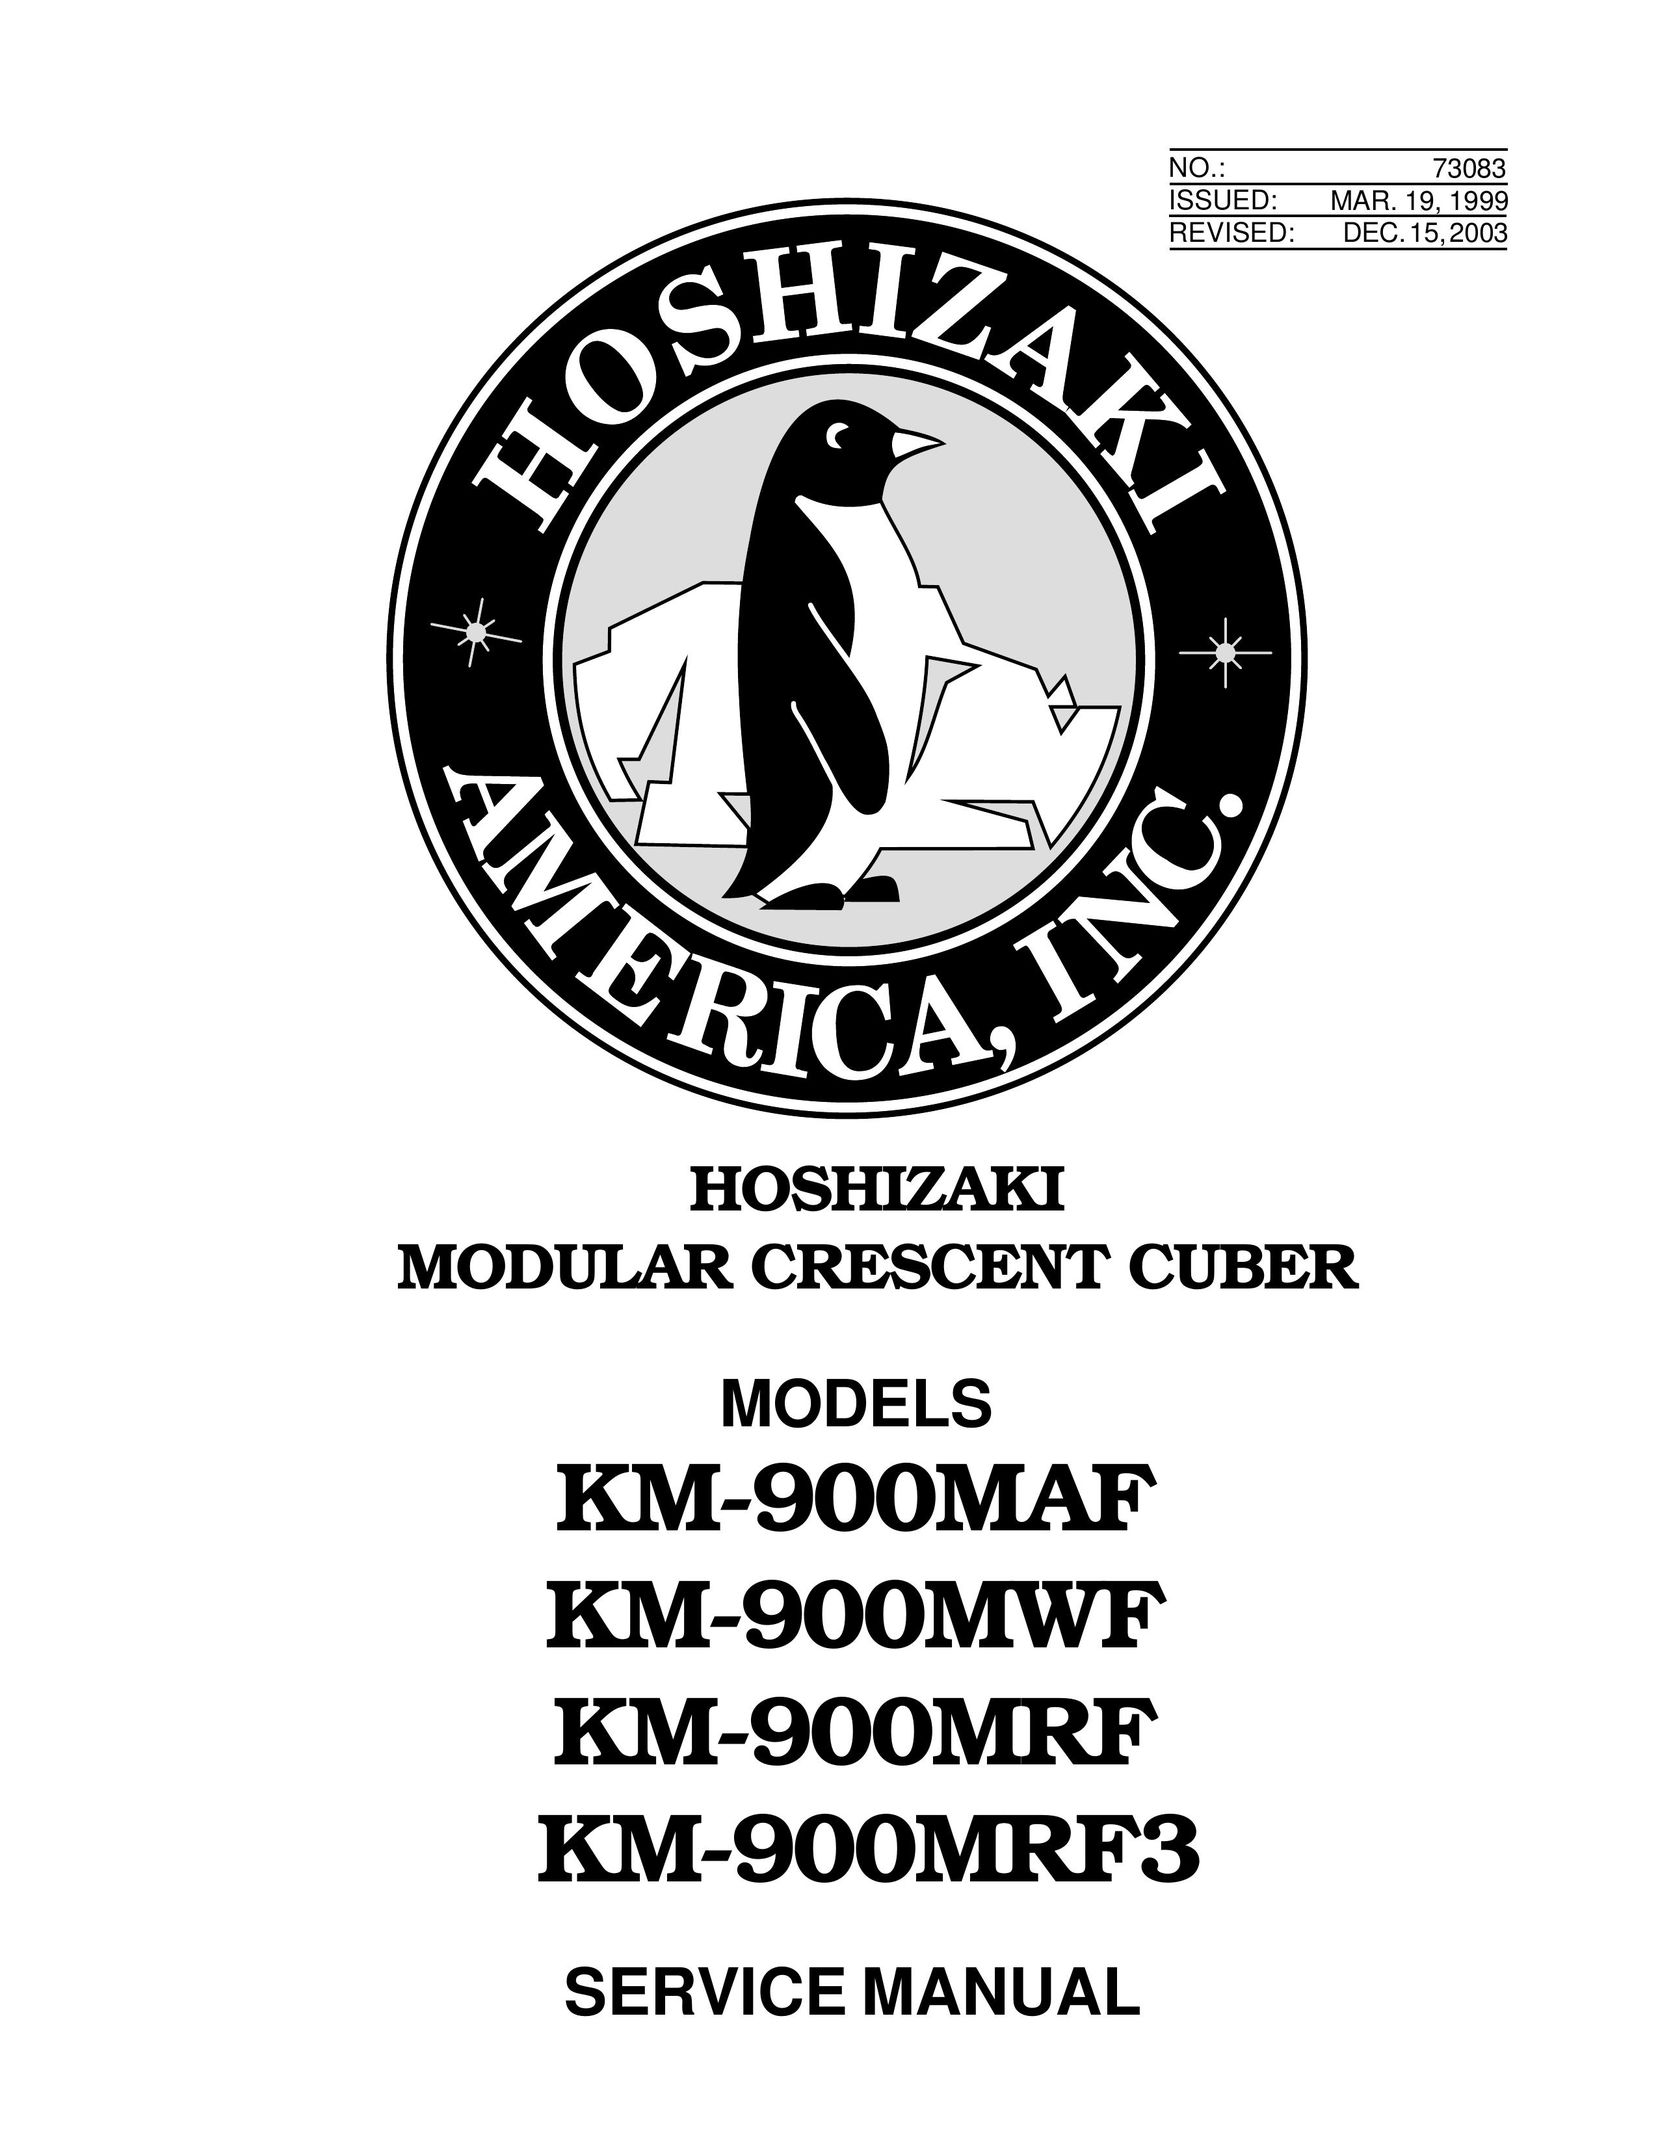 Hoshizaki KM-900MRF Cooktop User Manual